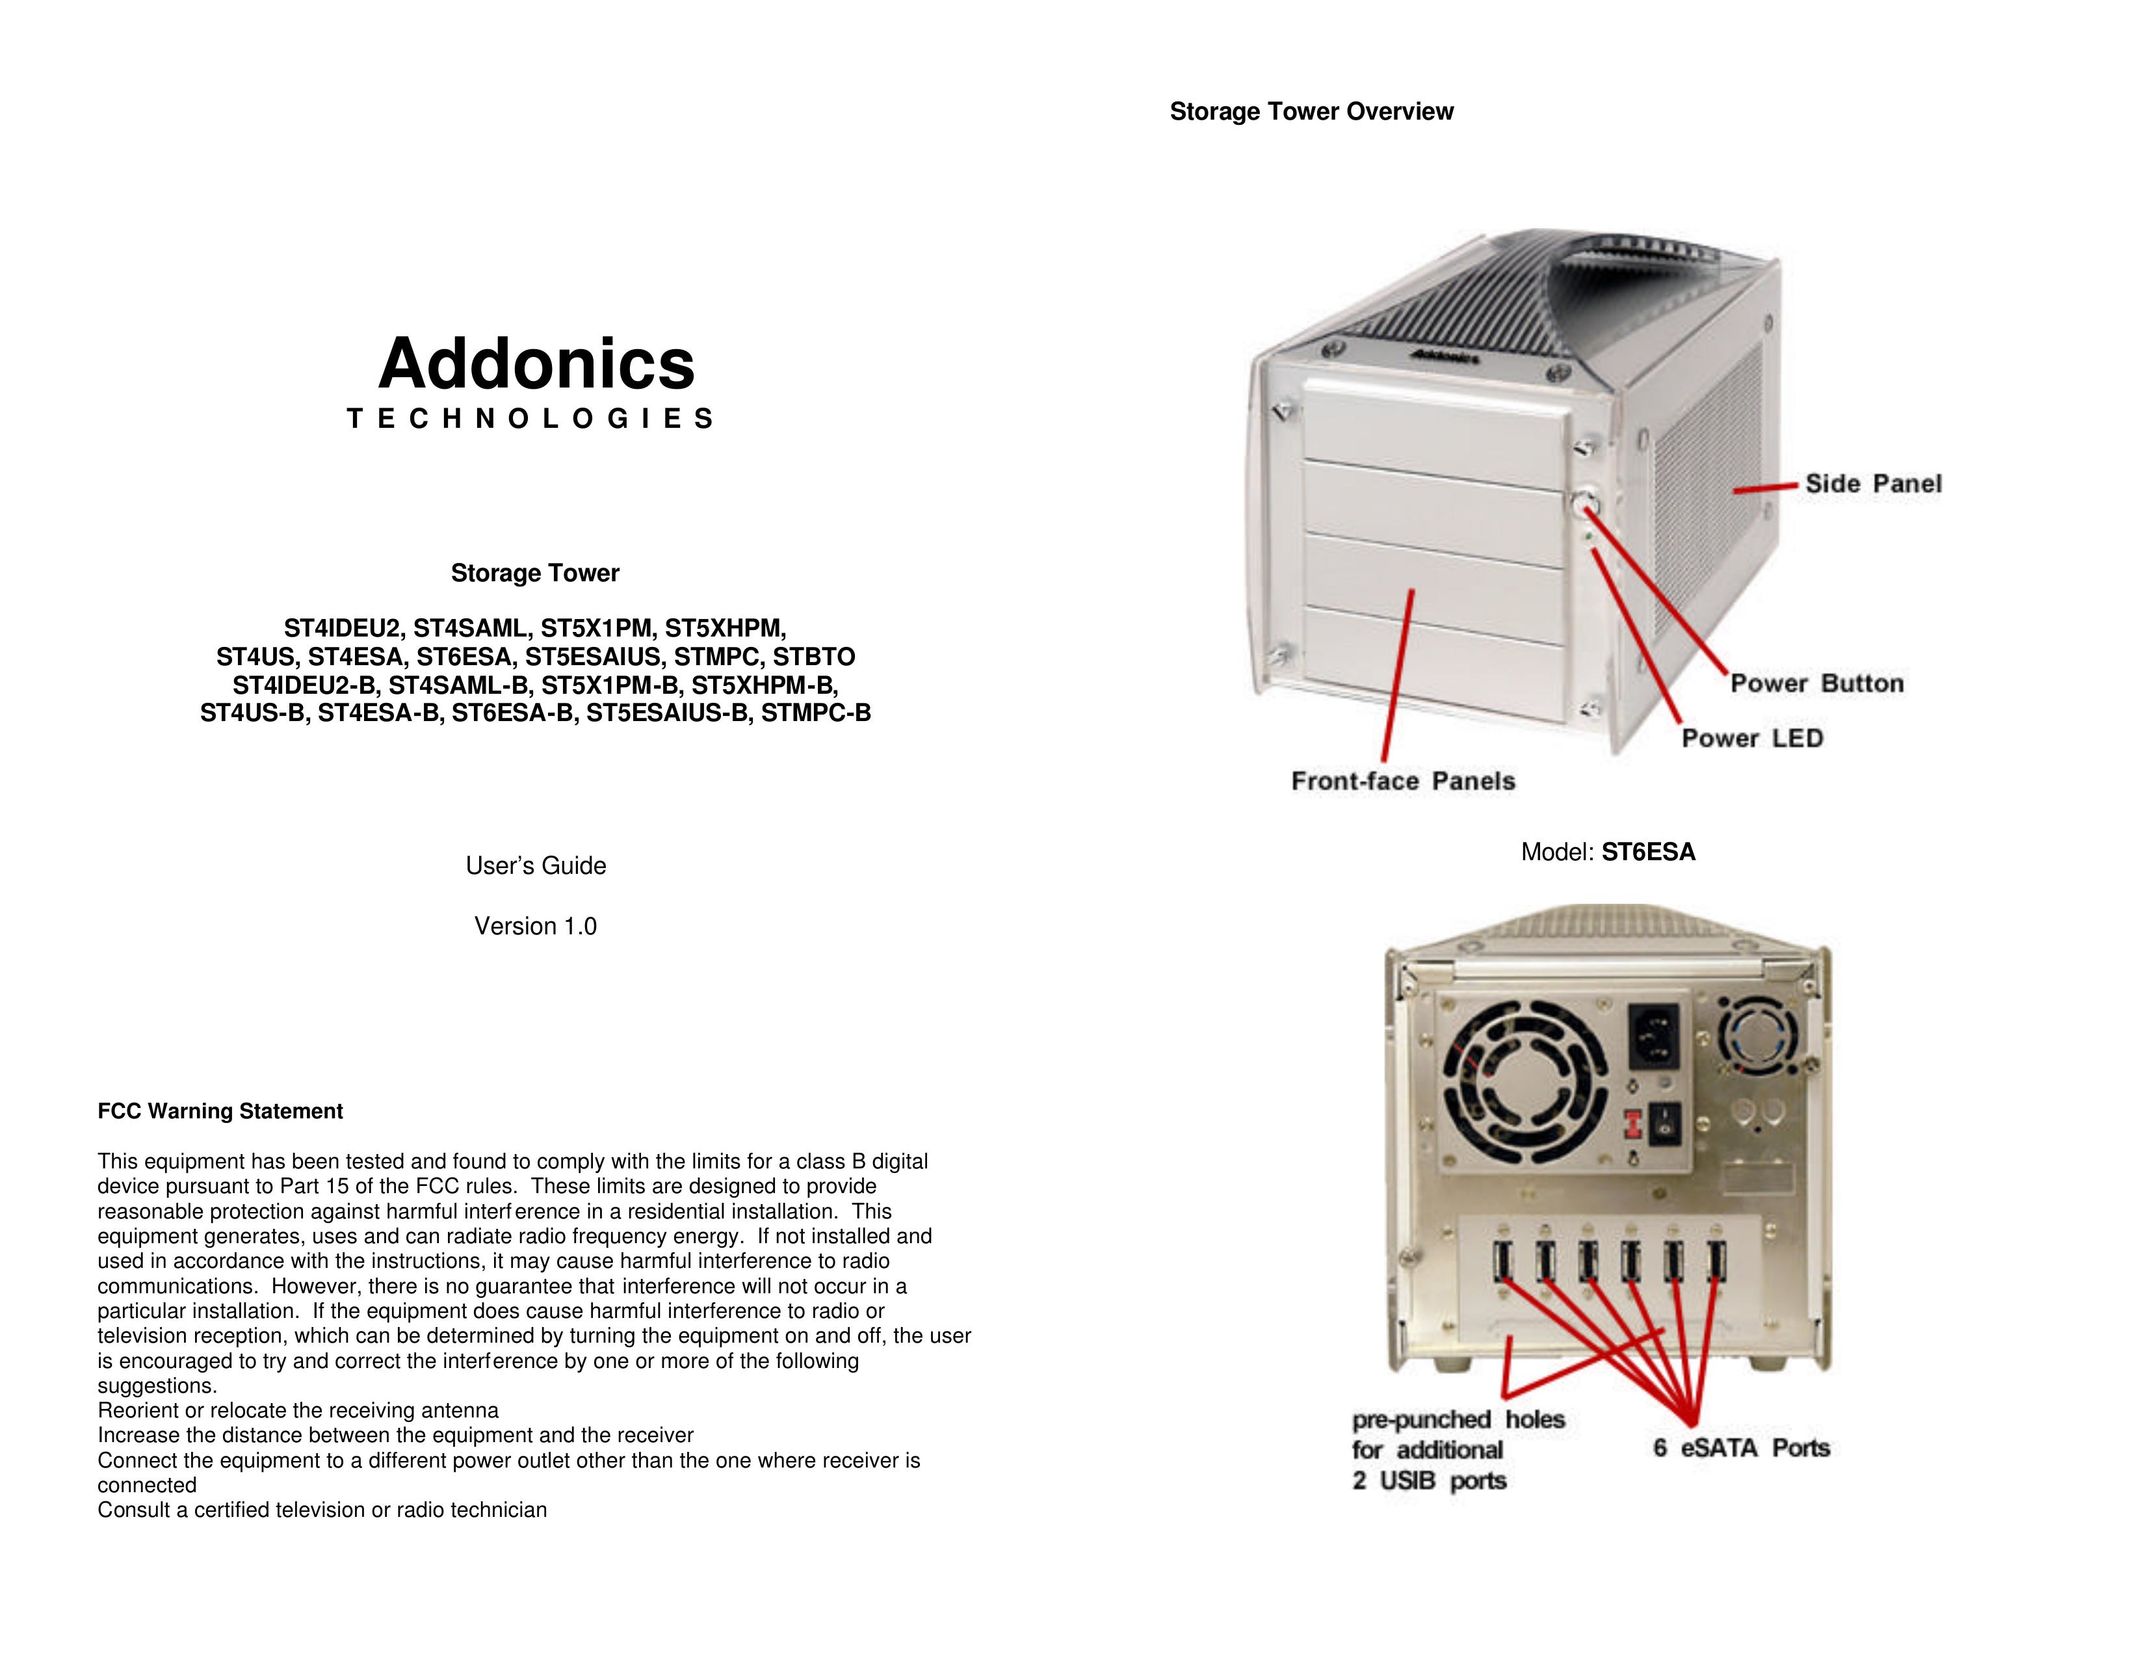 Addonics Technologies STBTO Portable Media Storage User Manual